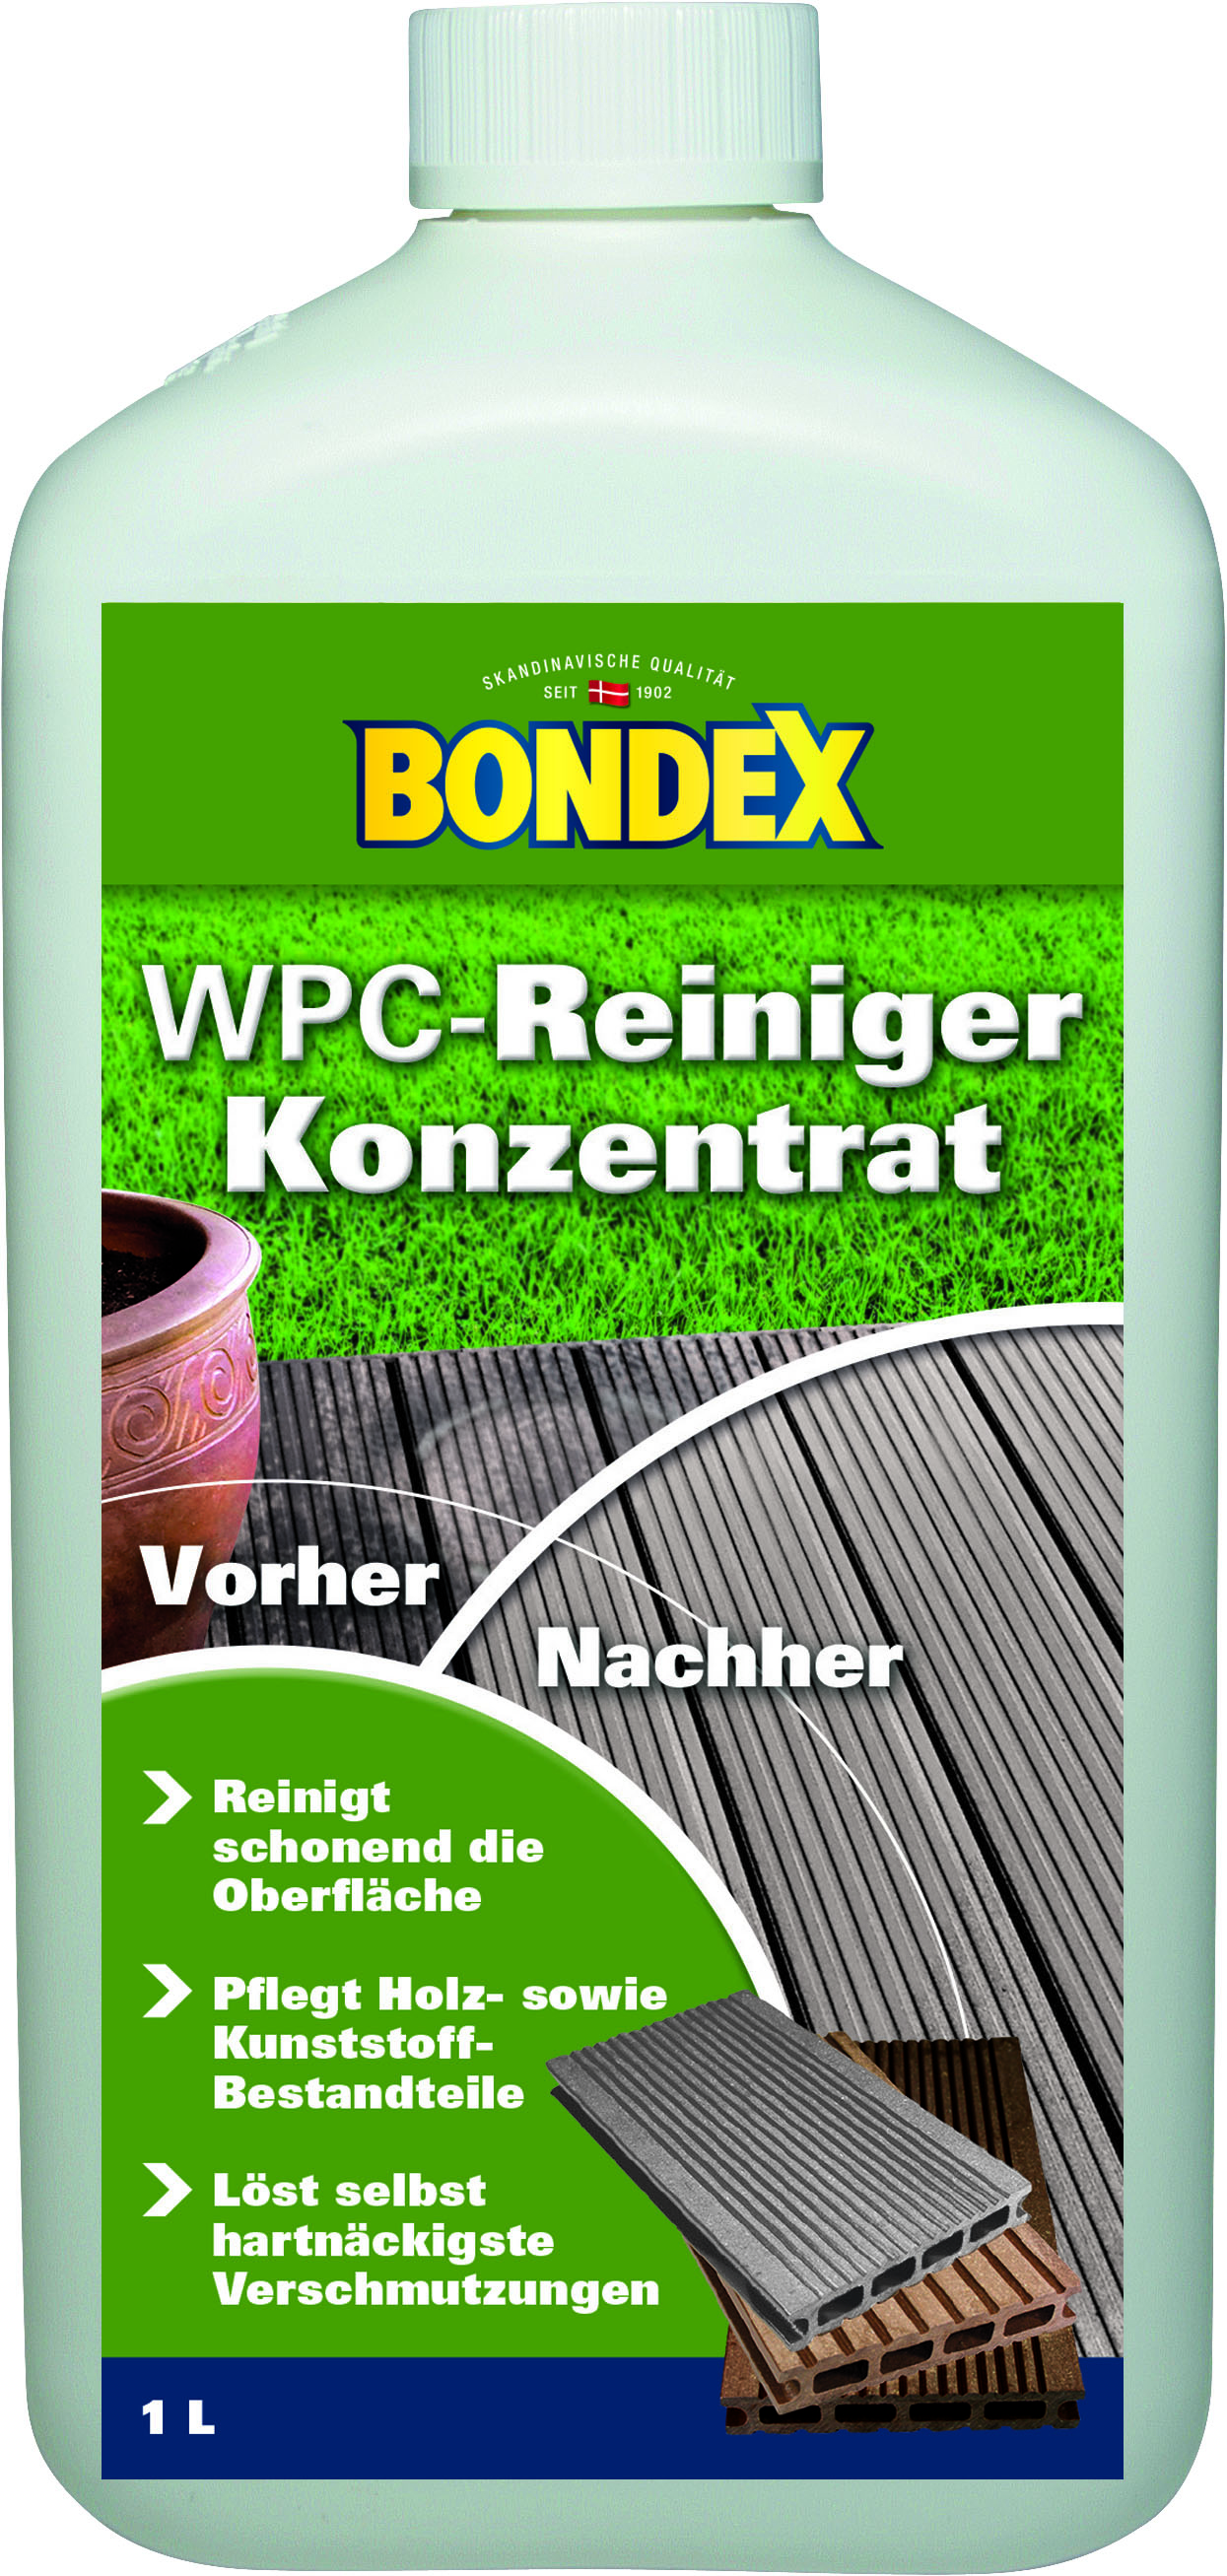 Bondex WPC-Reiniger Konzentrat, 1L